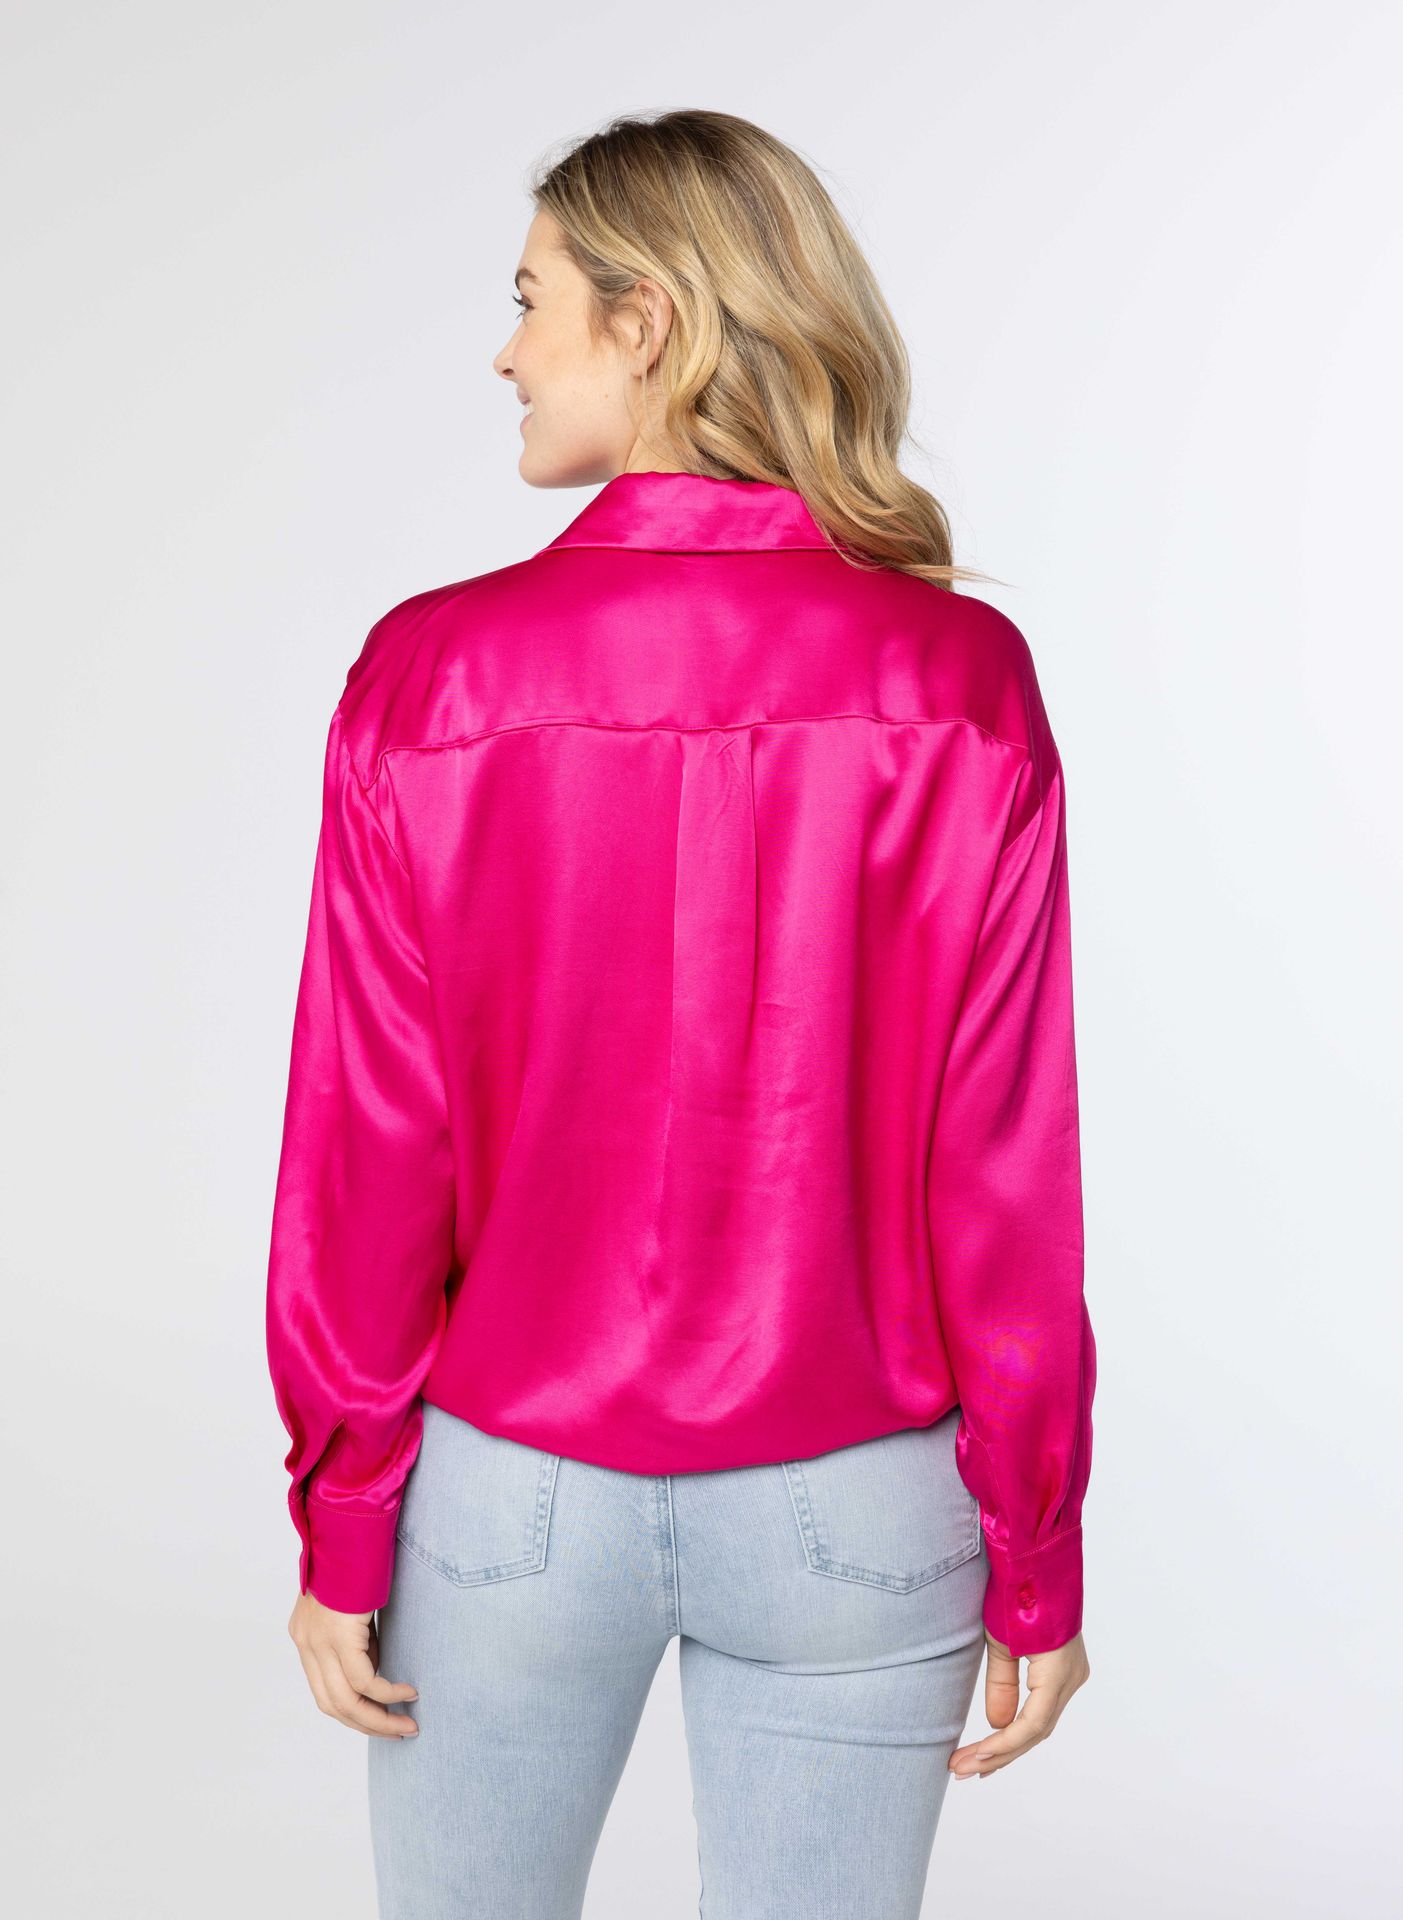 Norah Roze glanzende blouse pink 213940-900